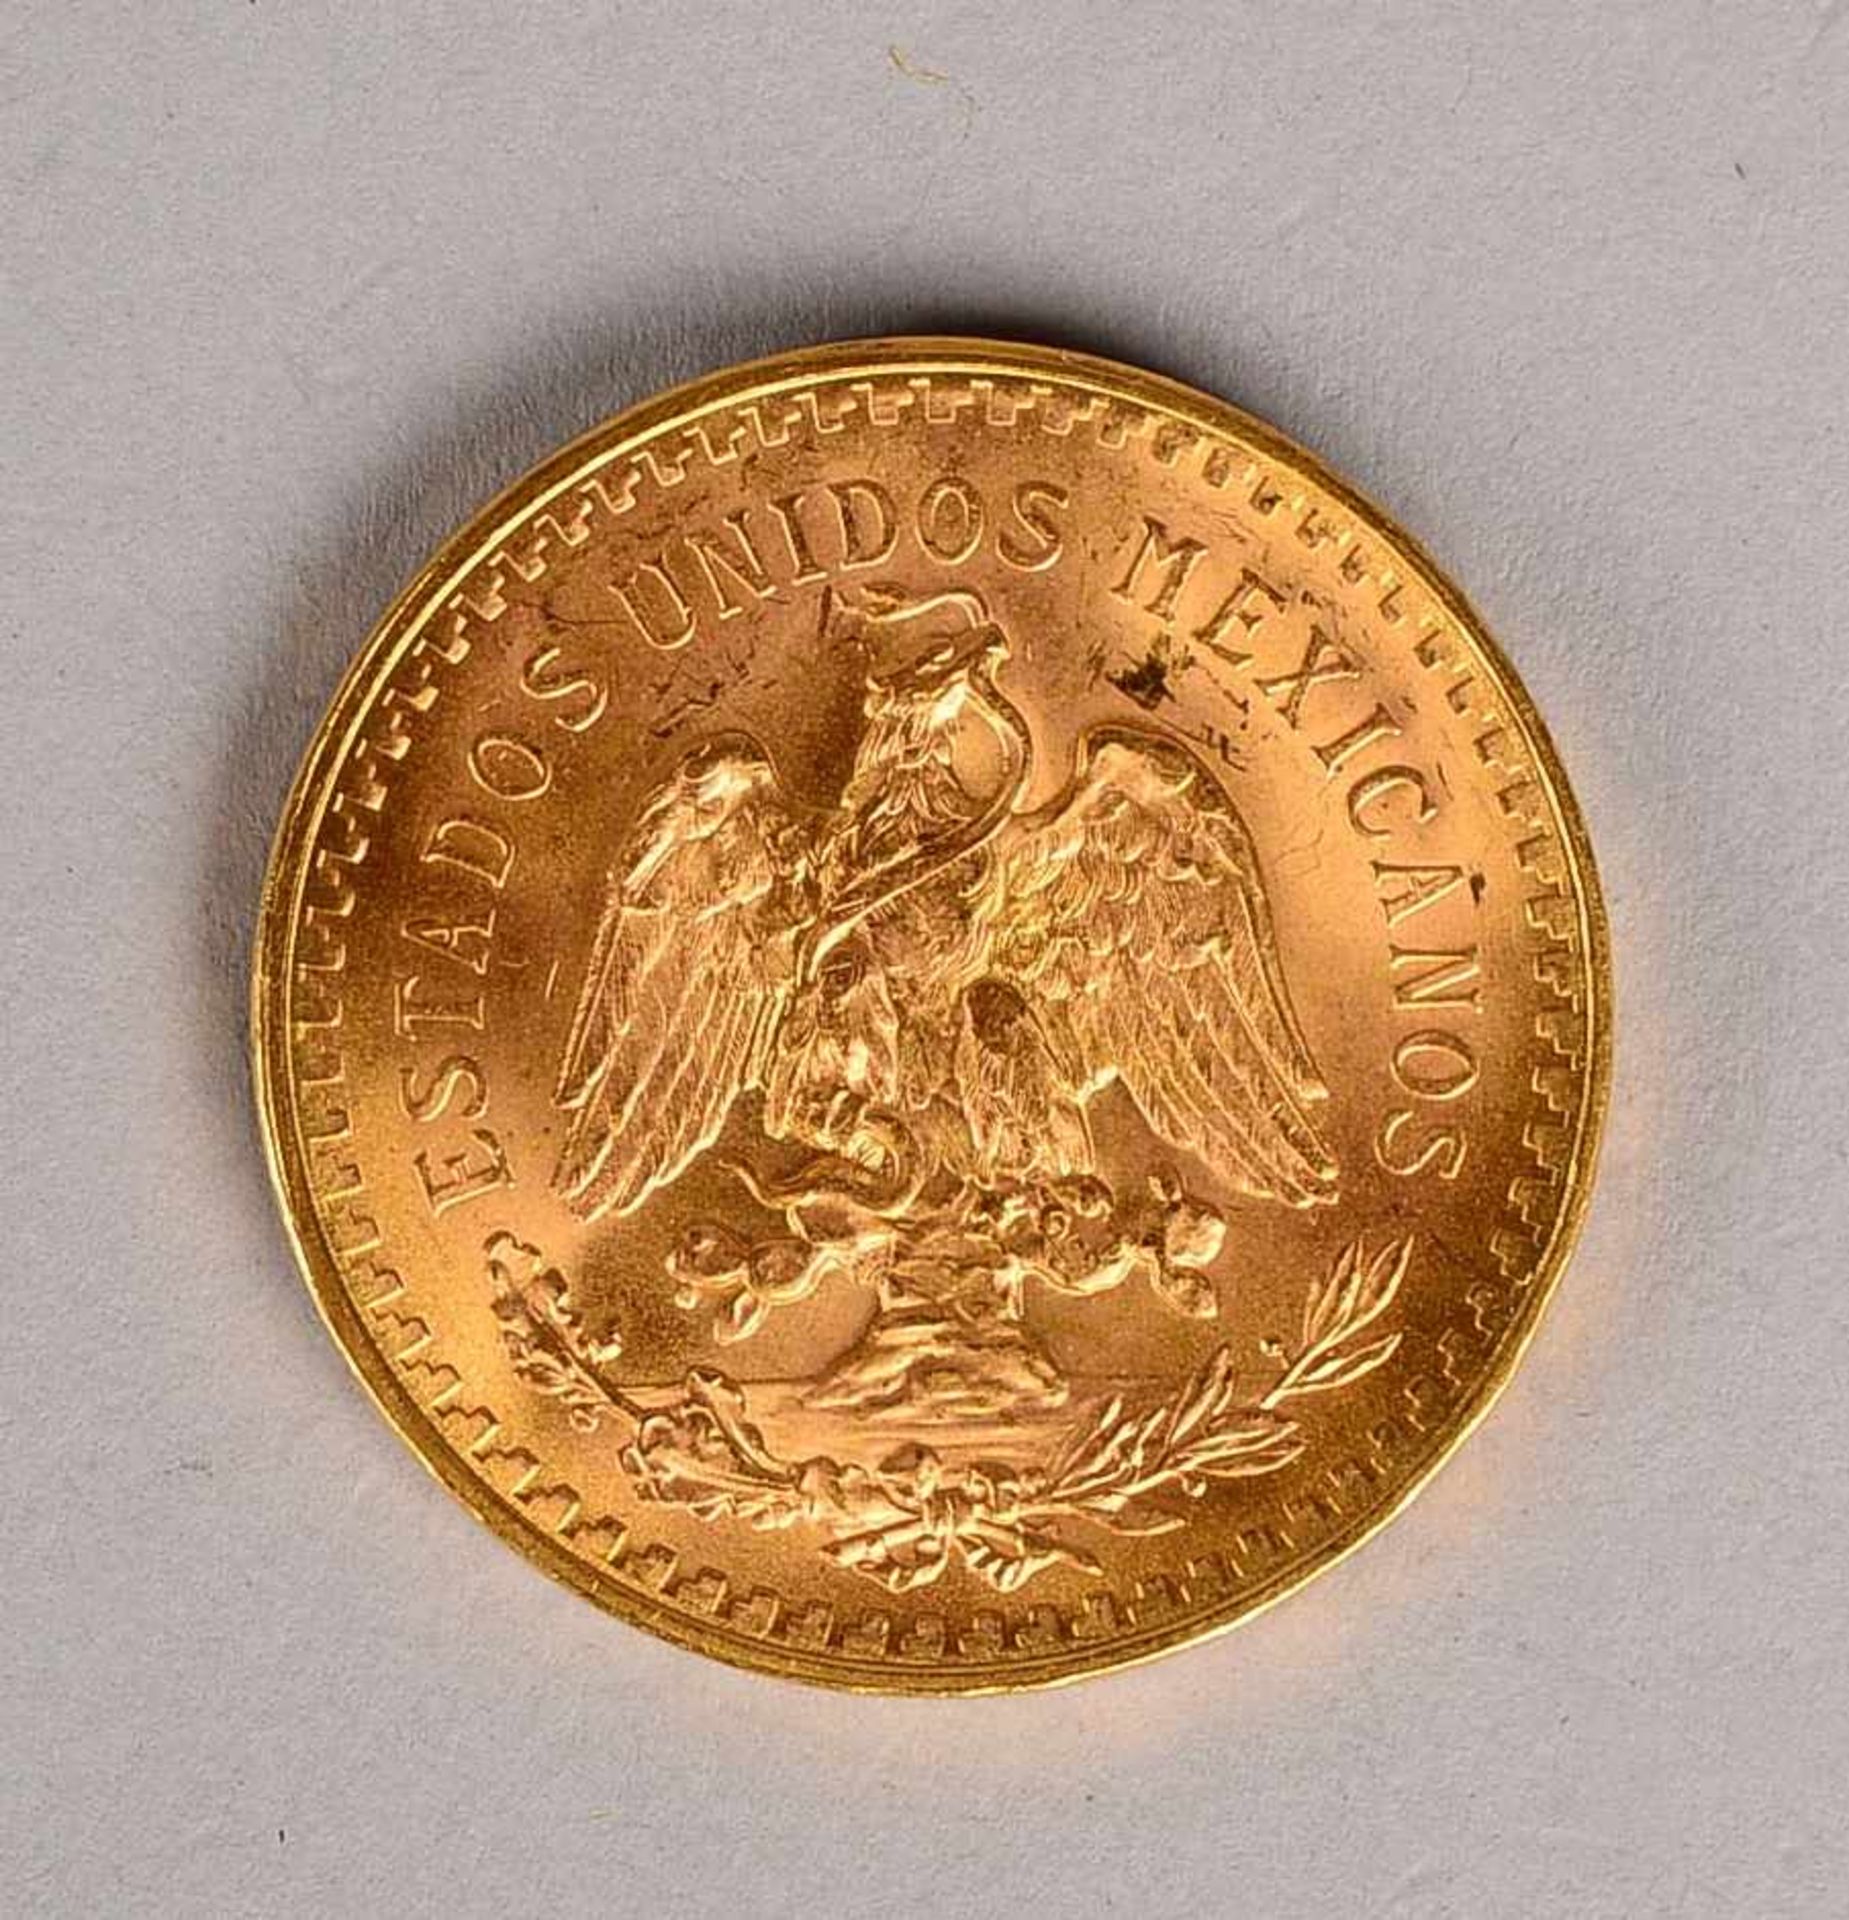 Goldmünze (Mexiko), '50 Pesos' - '1821 - 1947, Independencia y Libertad', im Etui; Gewicht 41,6 g (